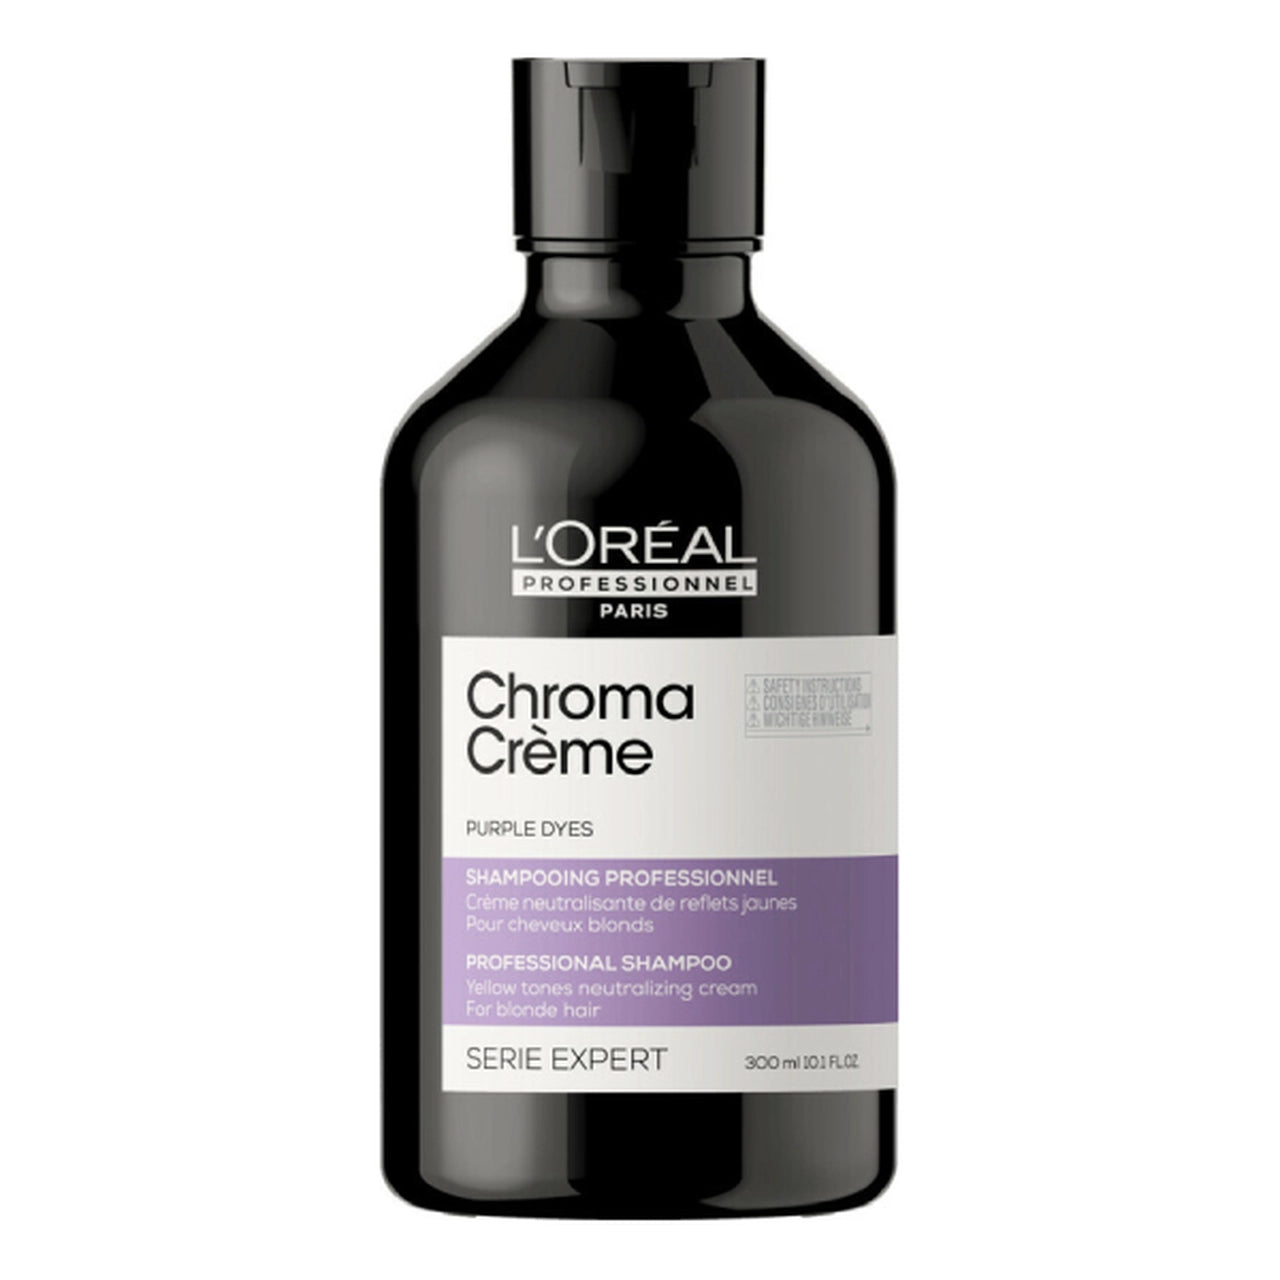 Chroma Creme